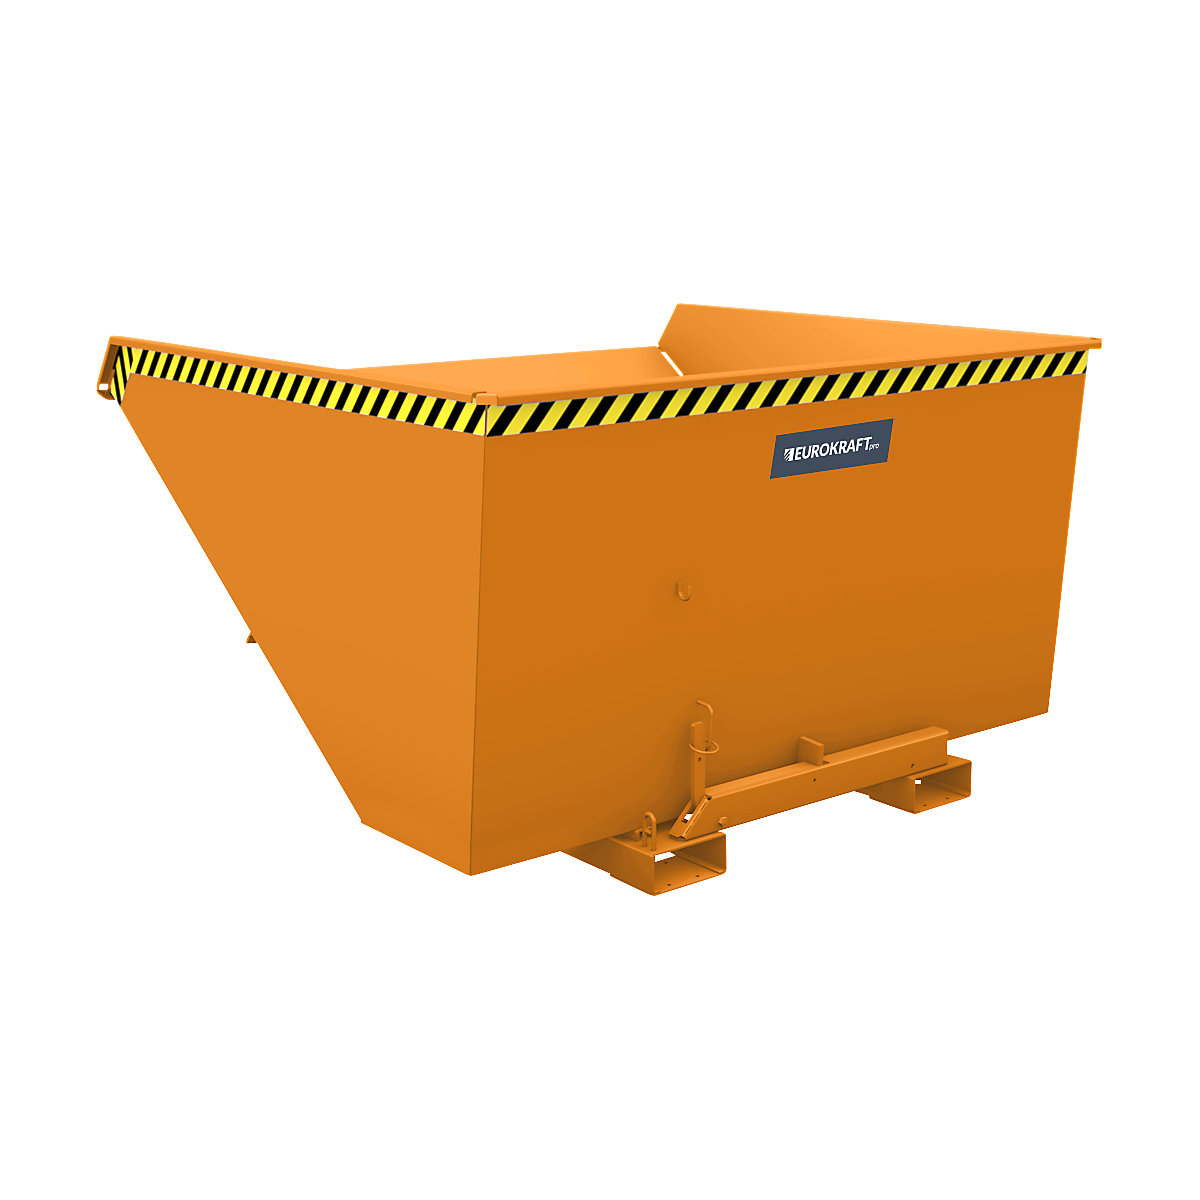 Kippbehälter inkl. Abrollmechanismus eurokraft pro, Volumen 2,1 m³, LxBxH 1720 x 1870 x 1103 mm, orange-10